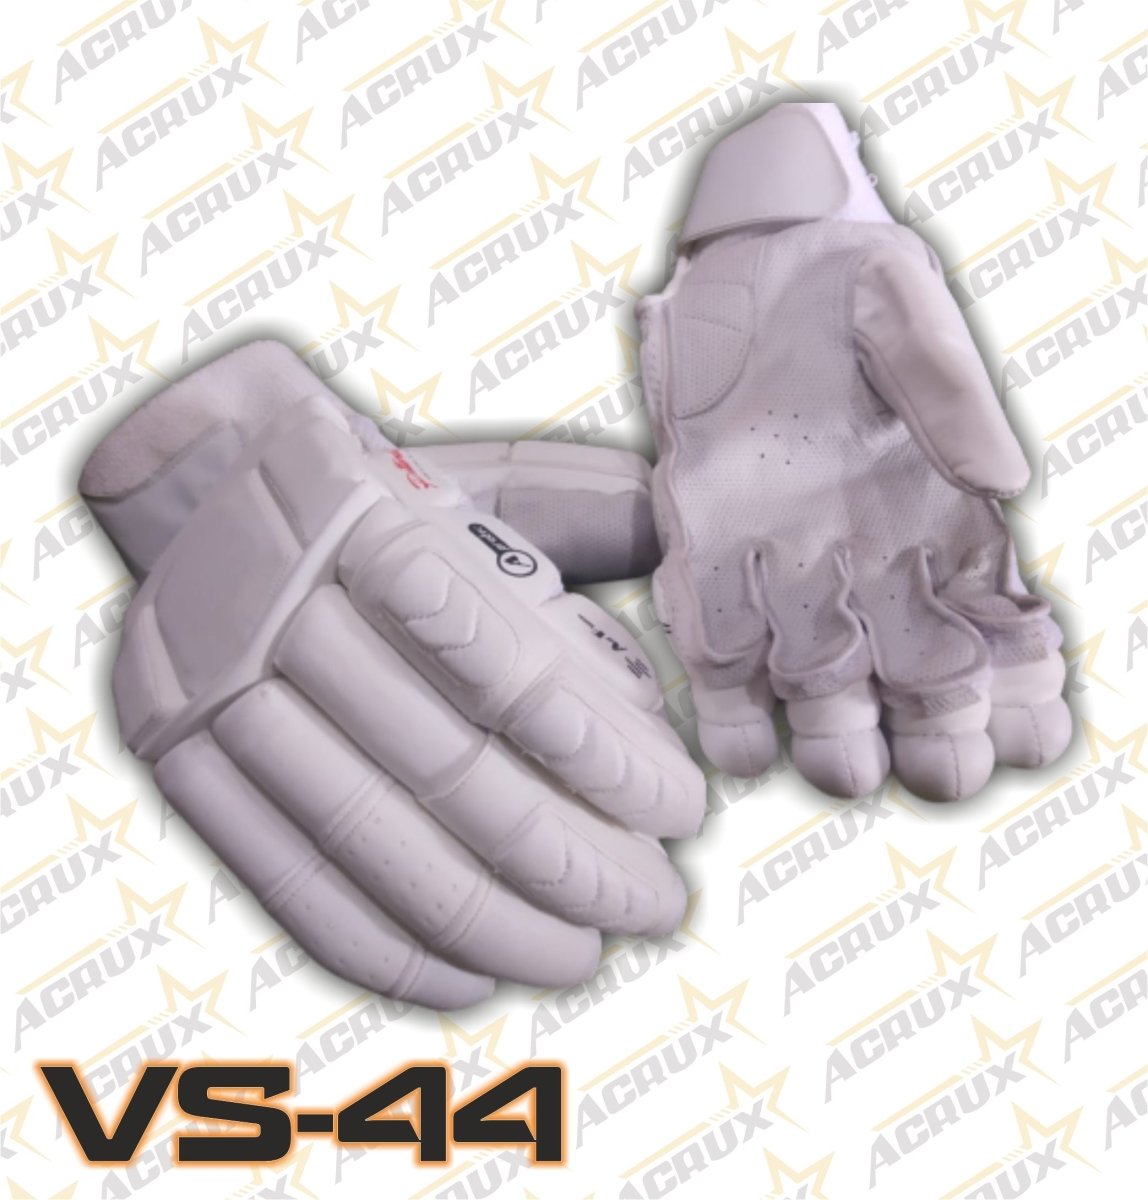 Cricket Batting Gloves SW-05 +Clean Skin Batting Pads Combo